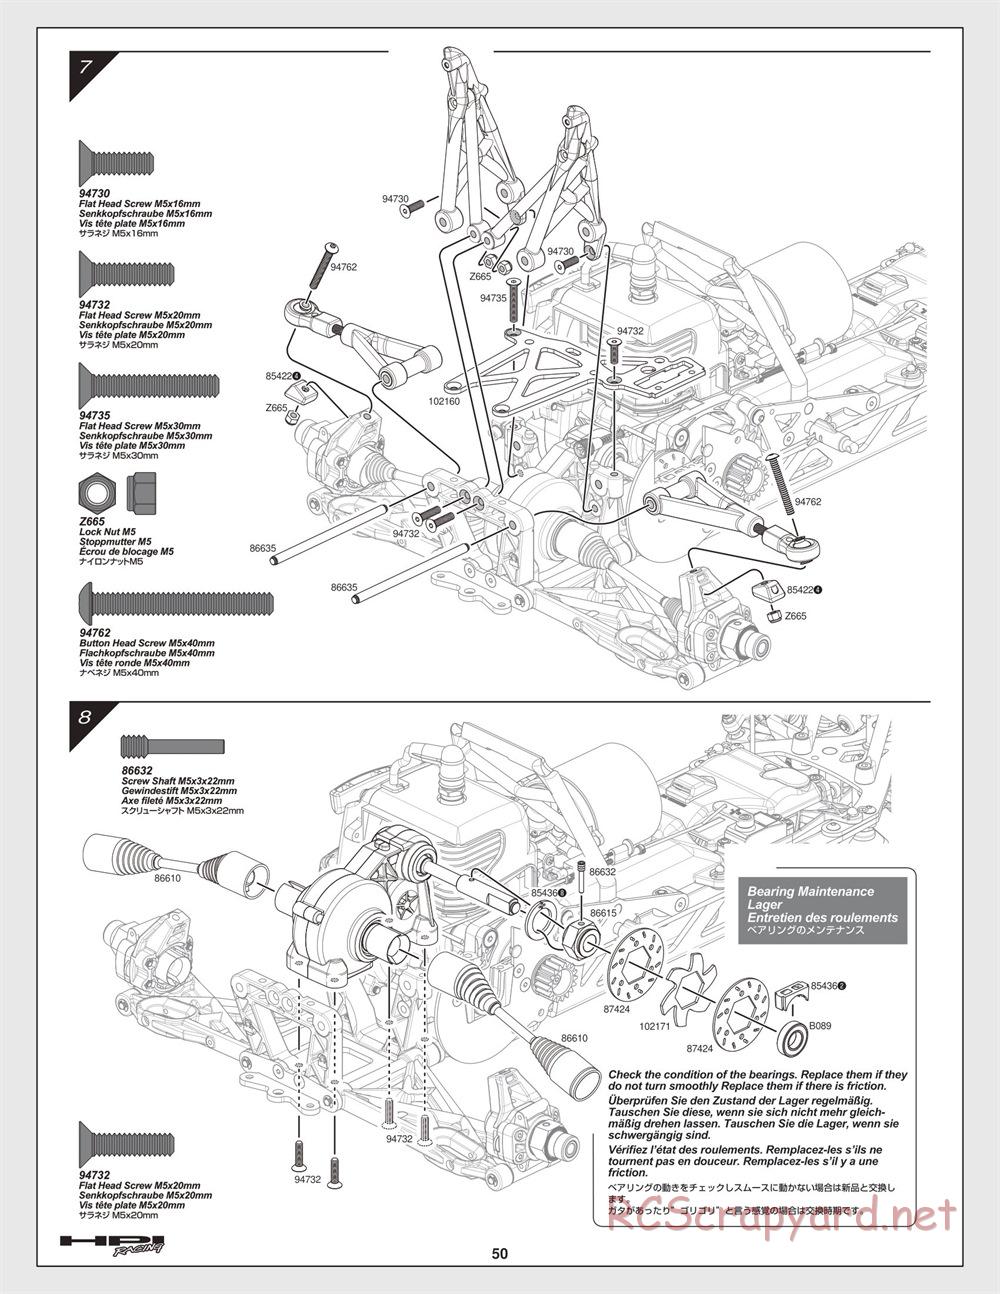 HPI - Baja 5B 2.0 - Manual - Page 50